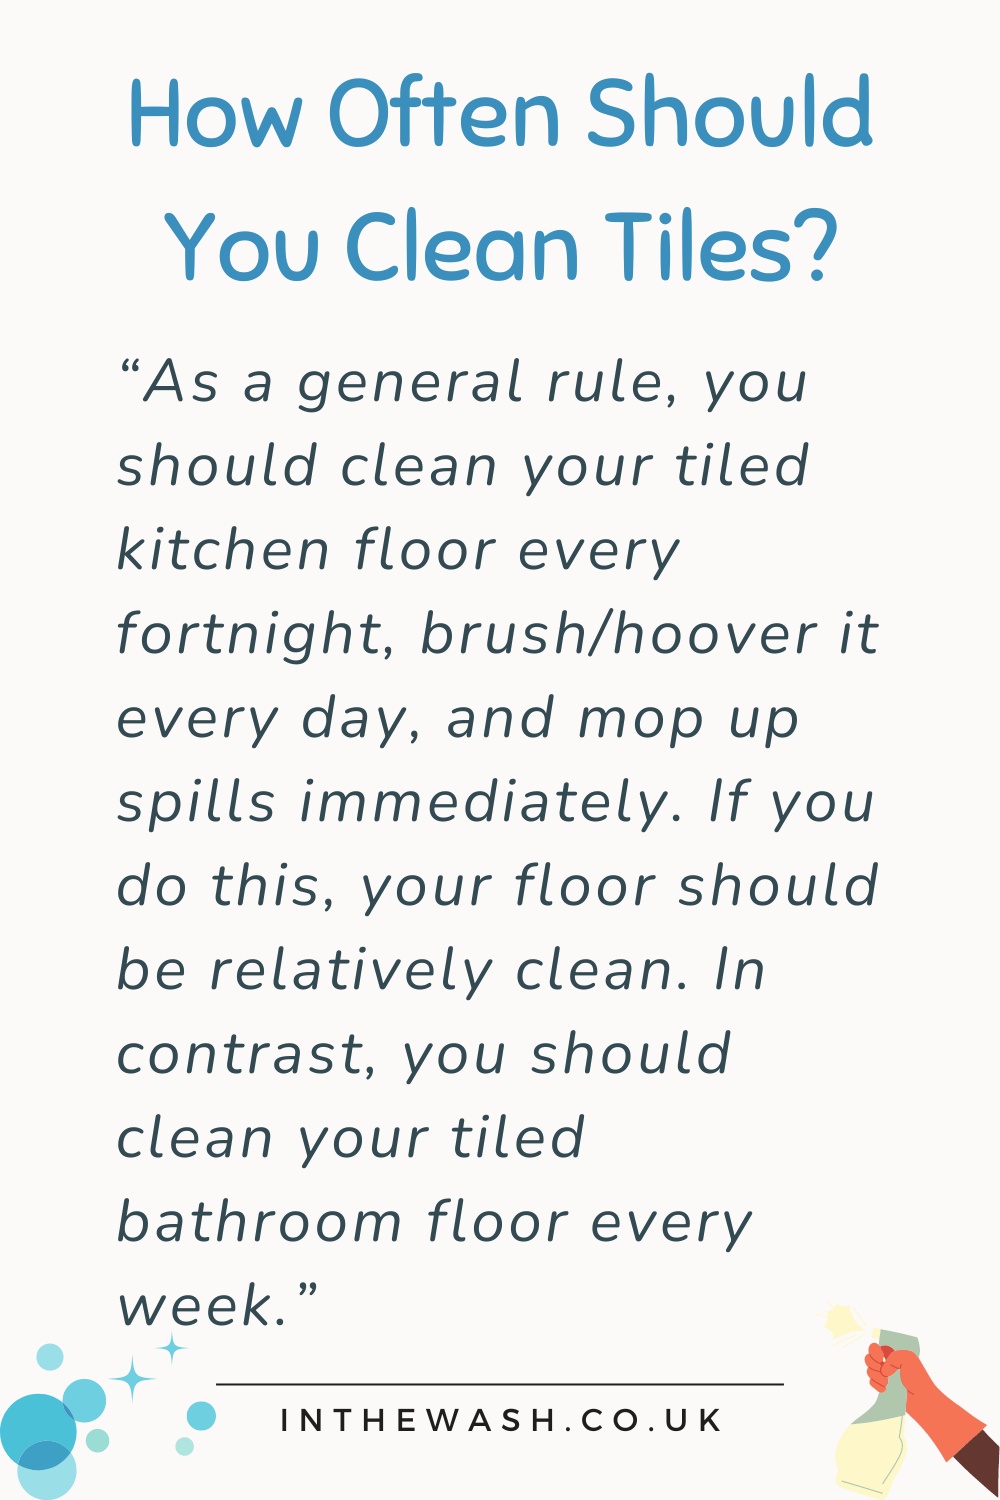 How often should you clean tiles?